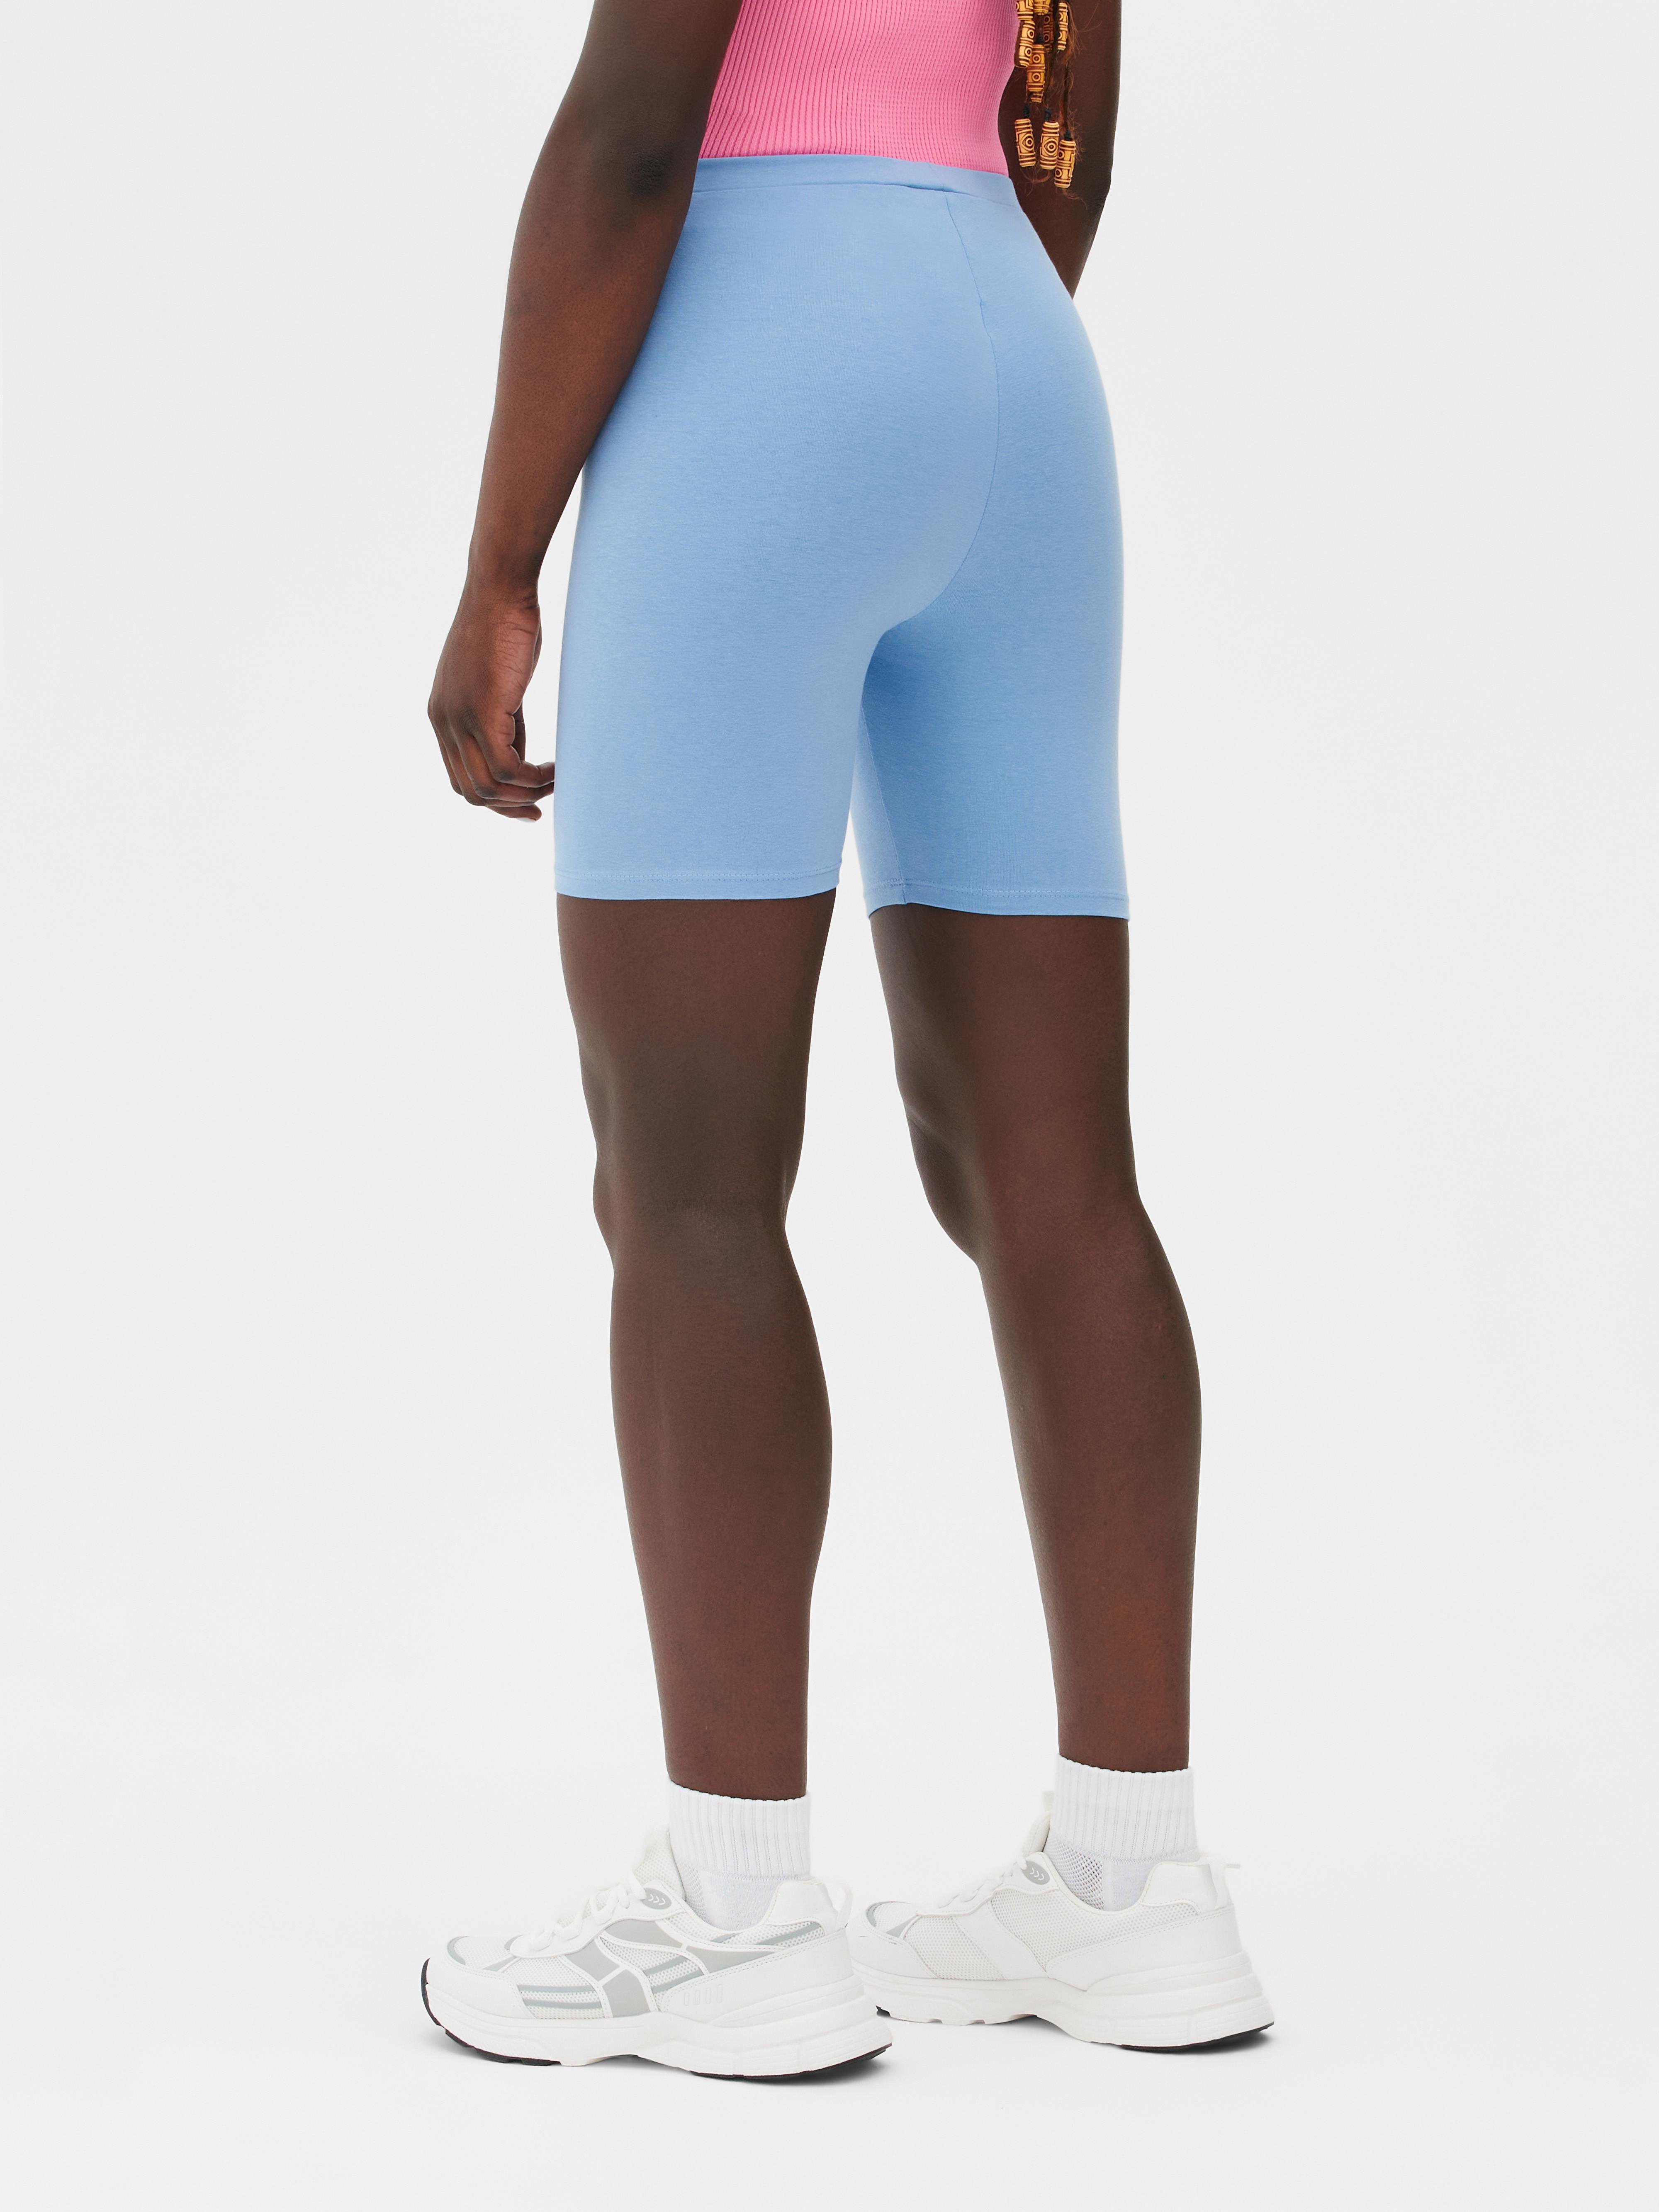 Cotton Cycling Shorts